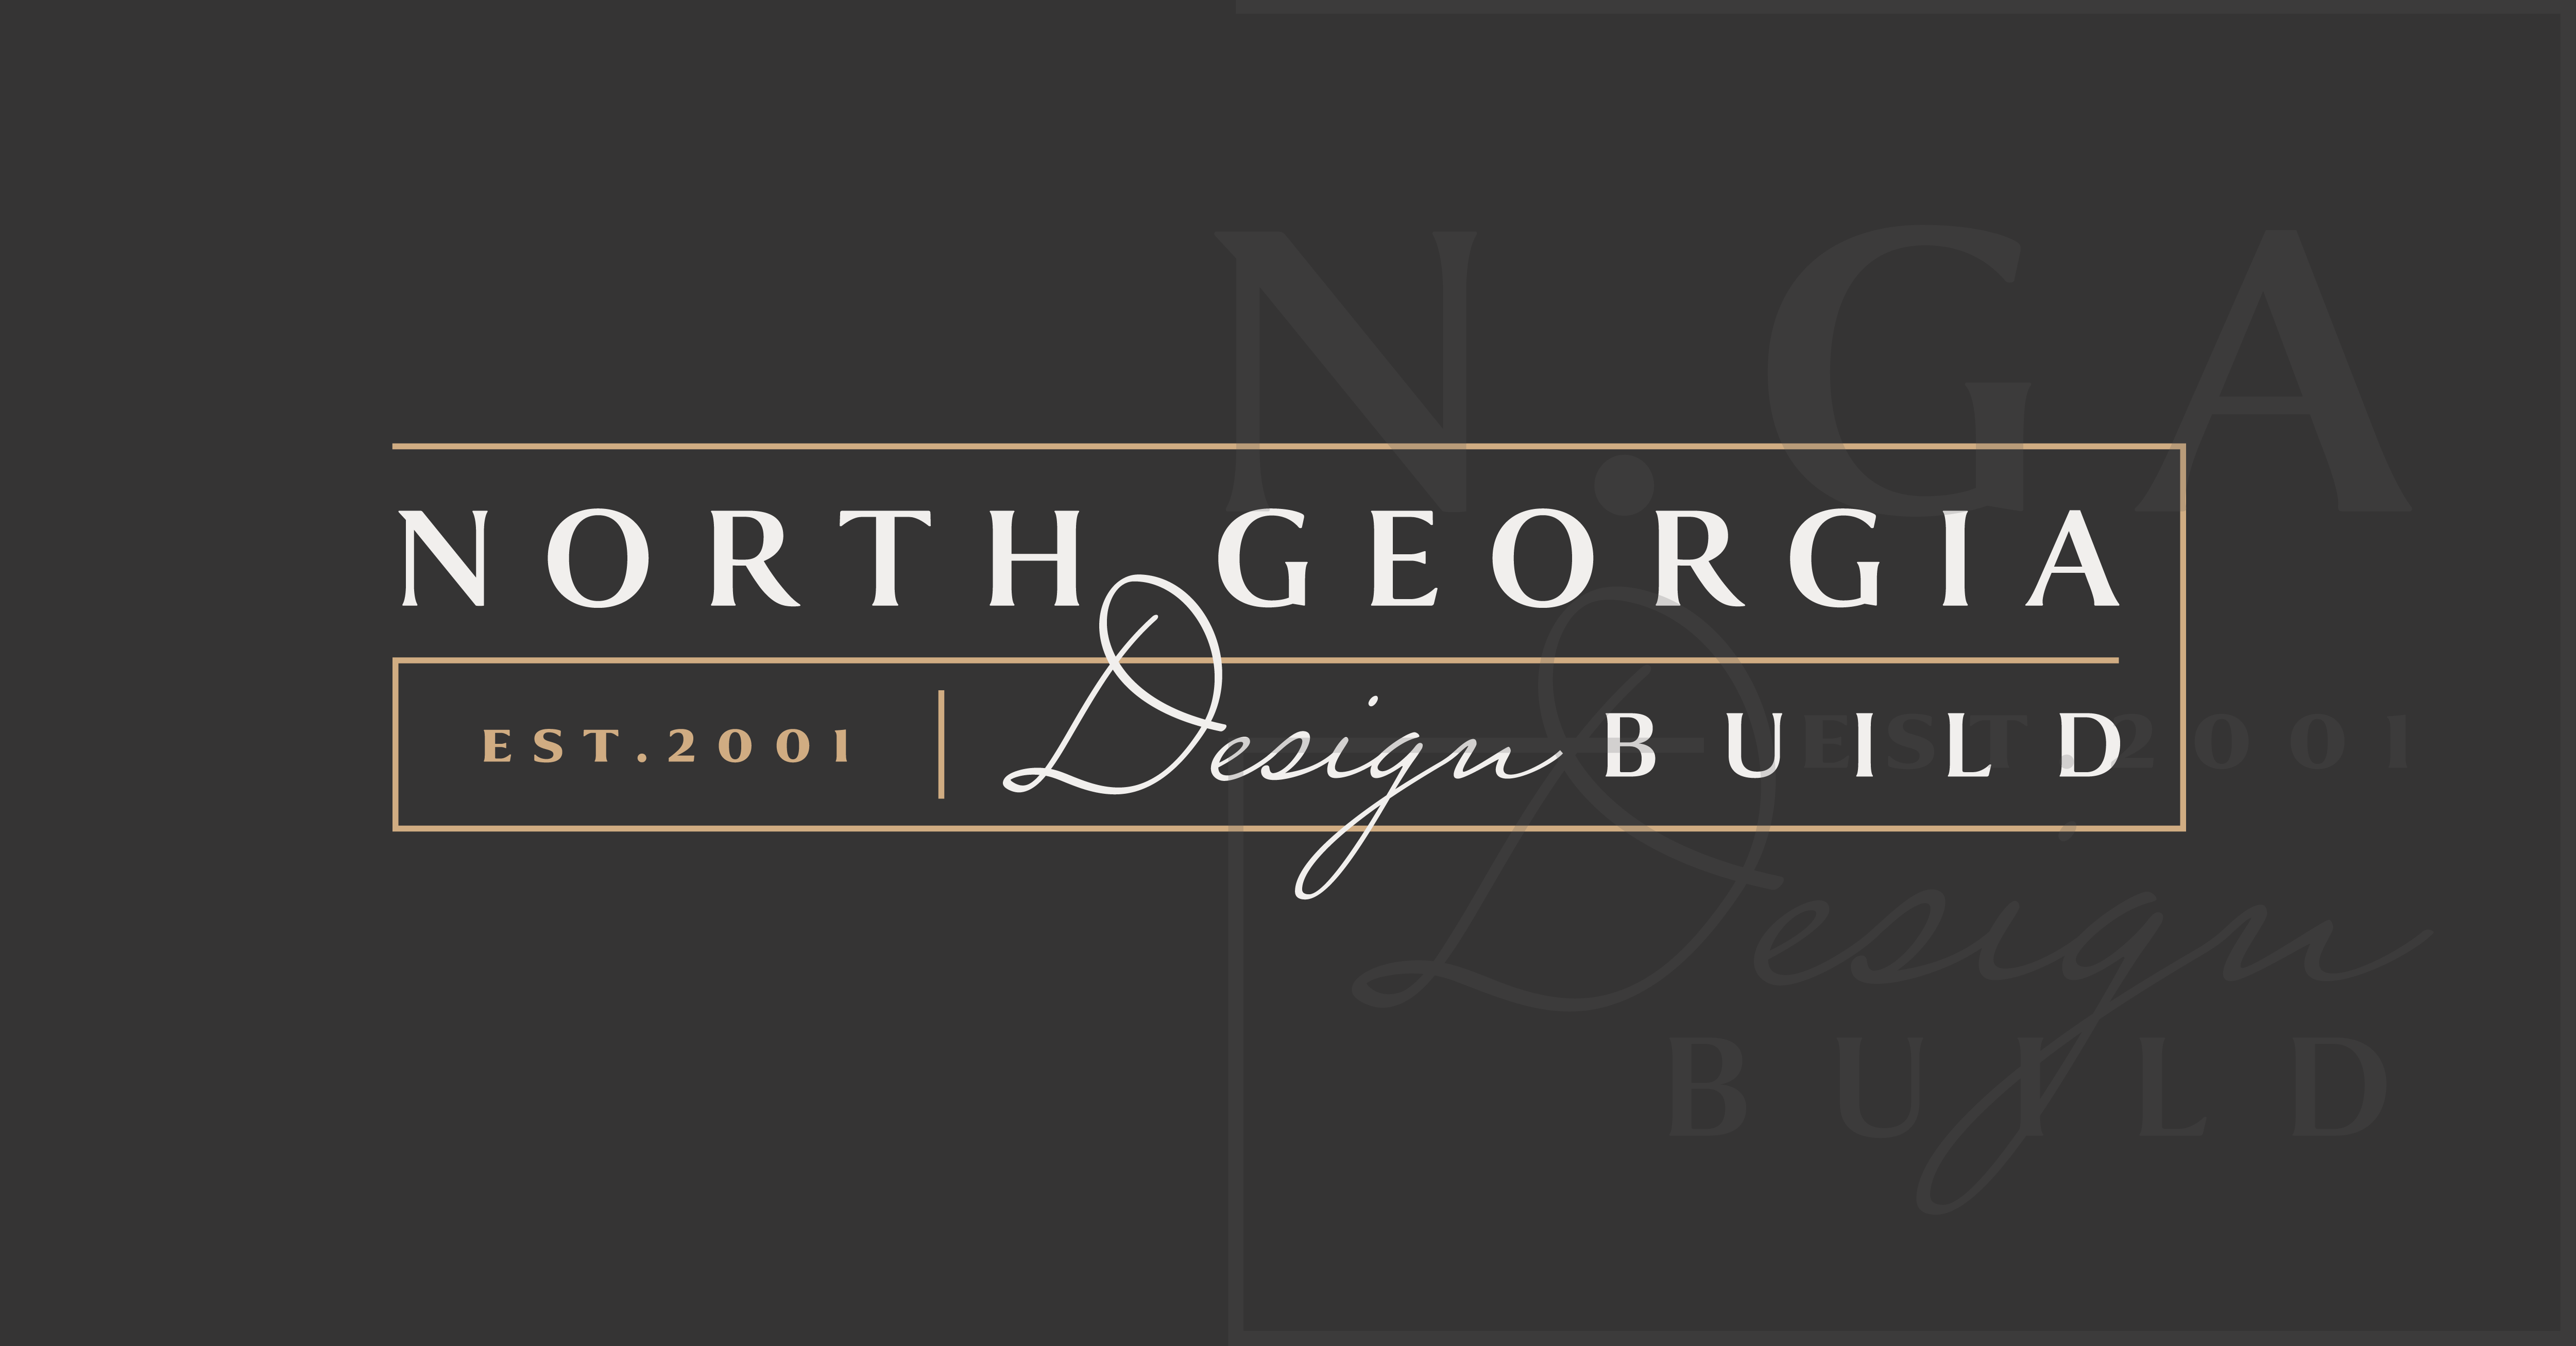 North Georgia Design Build thumbnail